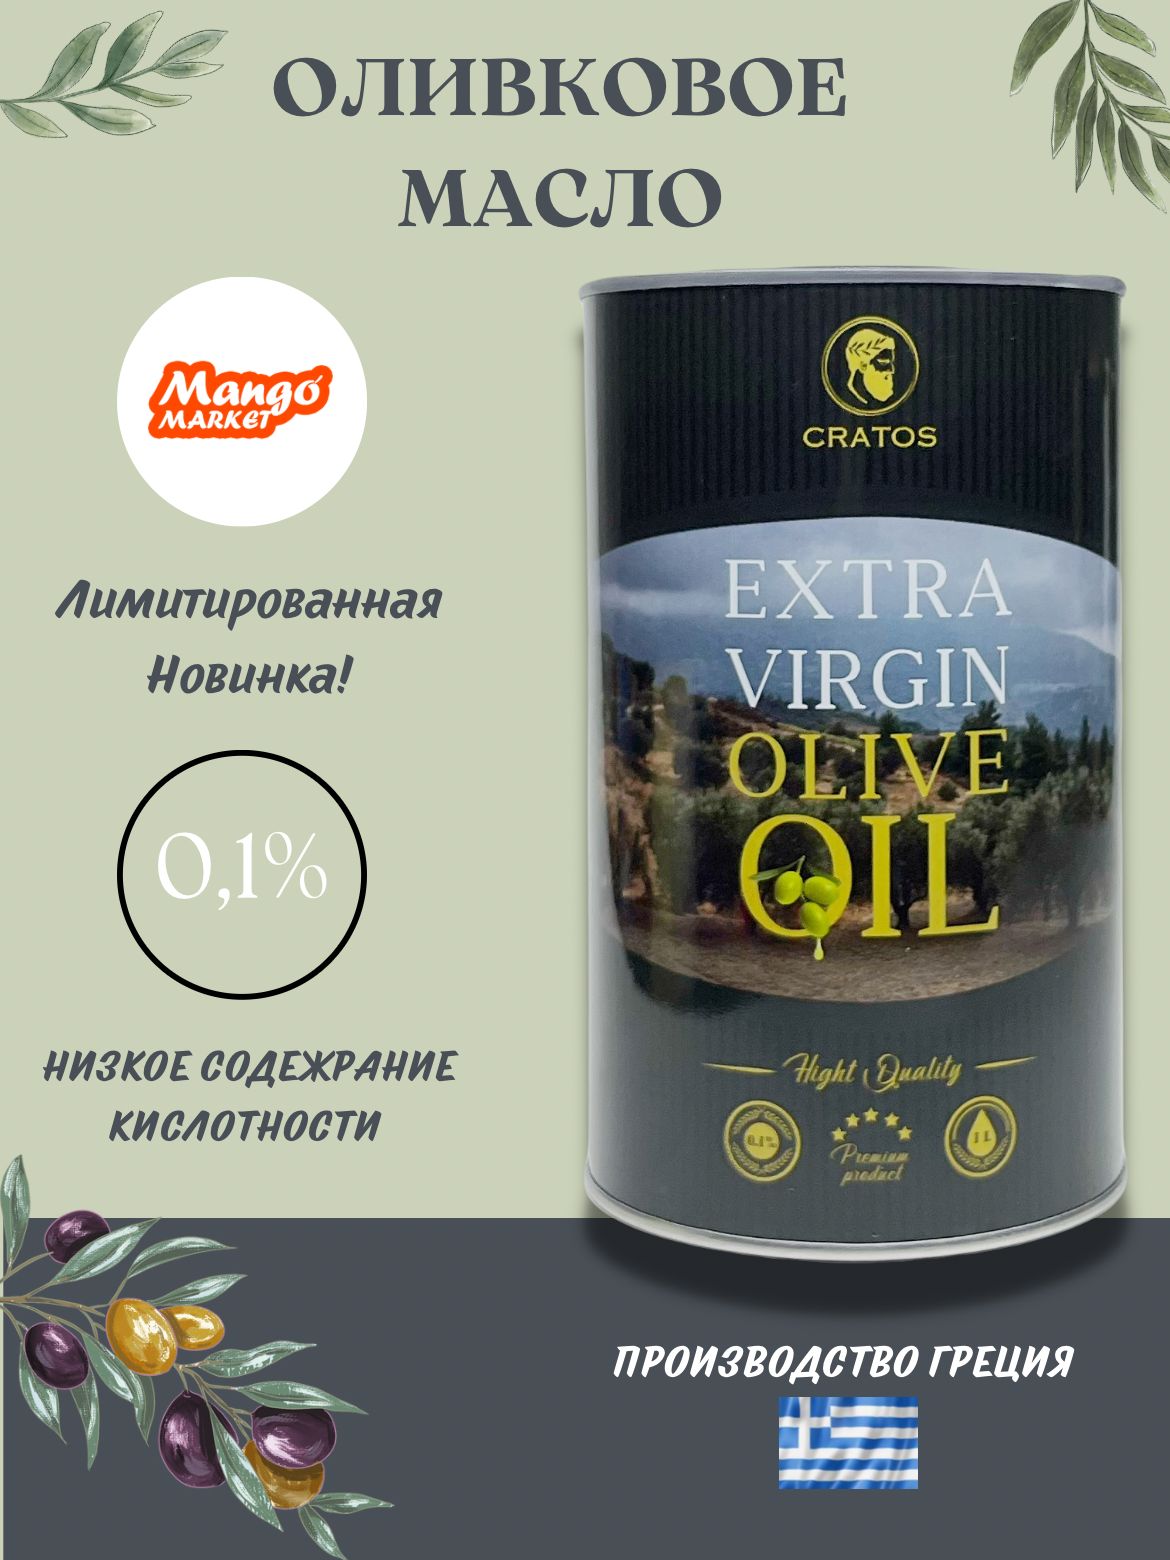 Cratos оливковое масло Extra Virgin 1л. Масло оливковое Cratos Cold Extraction. Oli.extravirgin Olivia. Cratos оливковое масло чье производство.